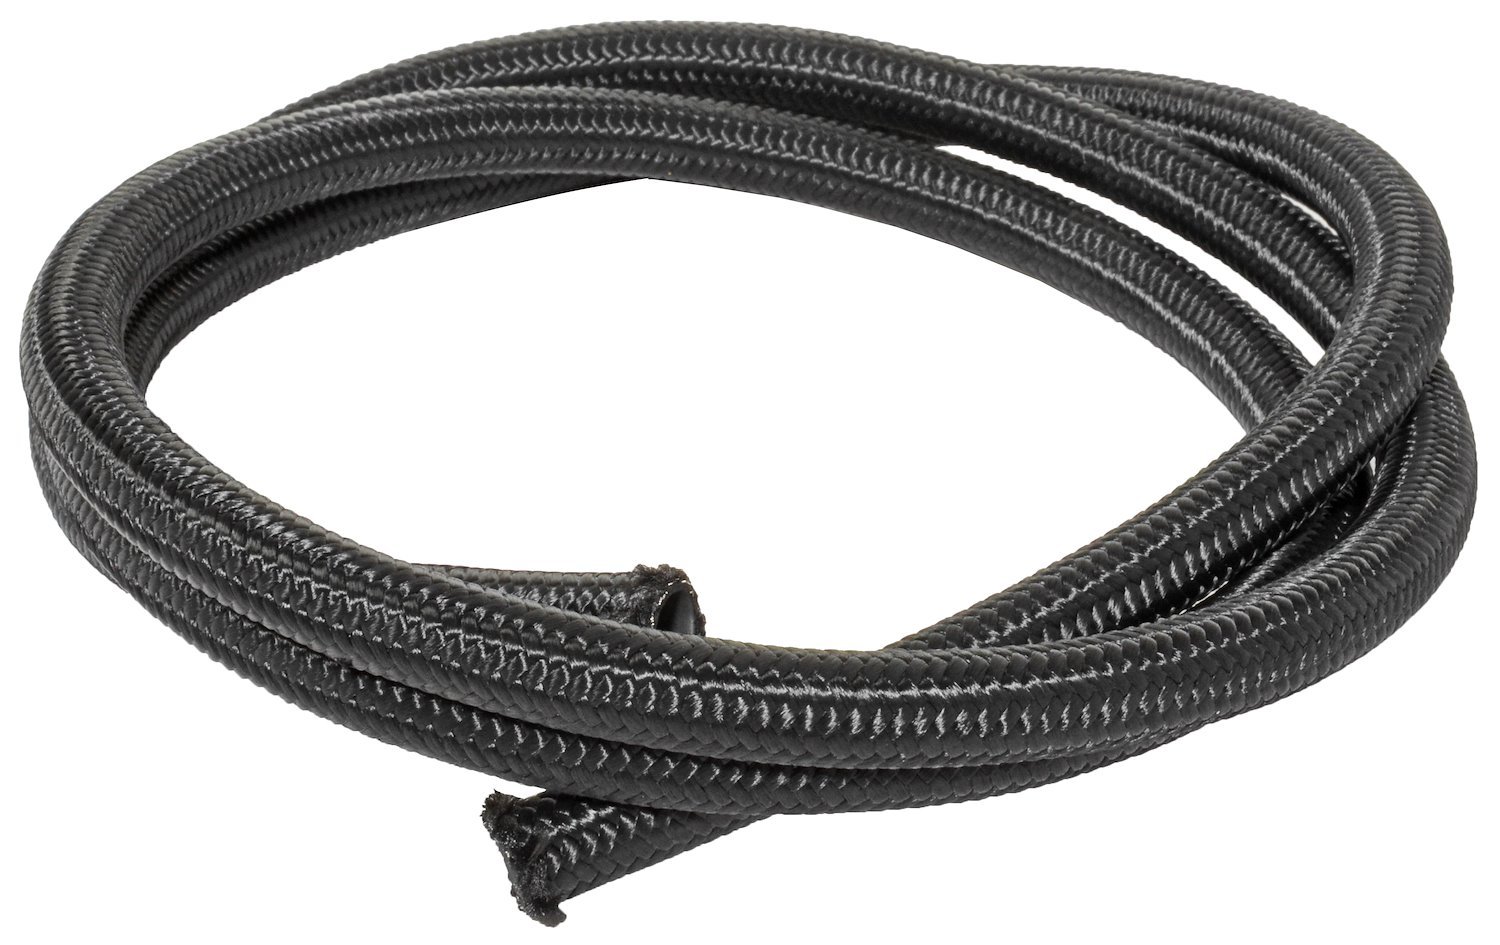 Pro-Flo 350 Black Nylon Braided Hose [-6 AN, 10 ft]